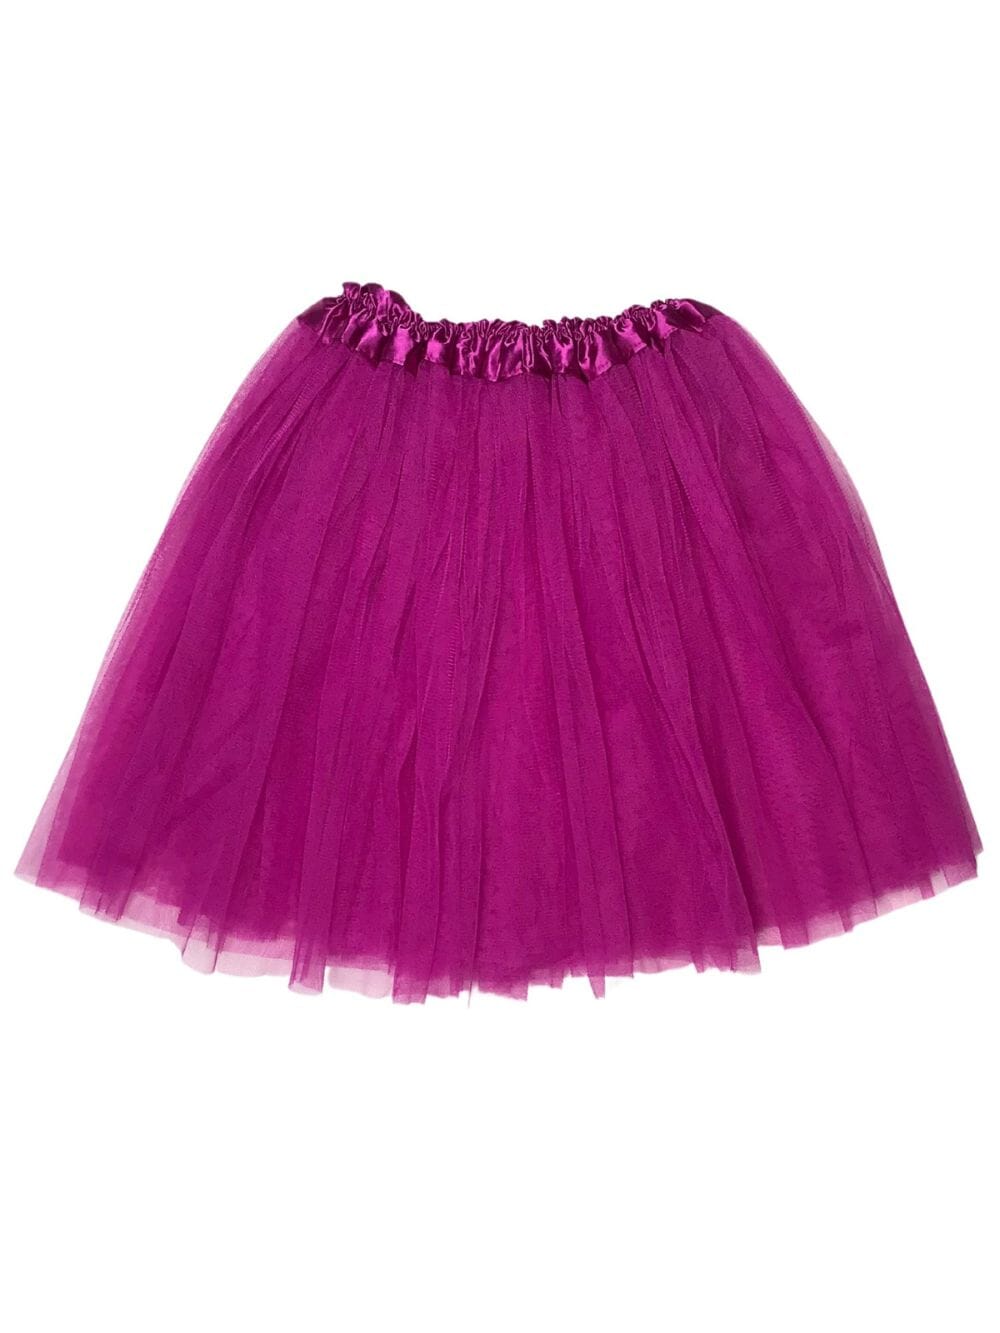 Fuchsia Plus Size Adult Tutu Skirt - Women's Plus Size 3- Layer Basic Ballet Costume Dance Tutus - Sydney So Sweet